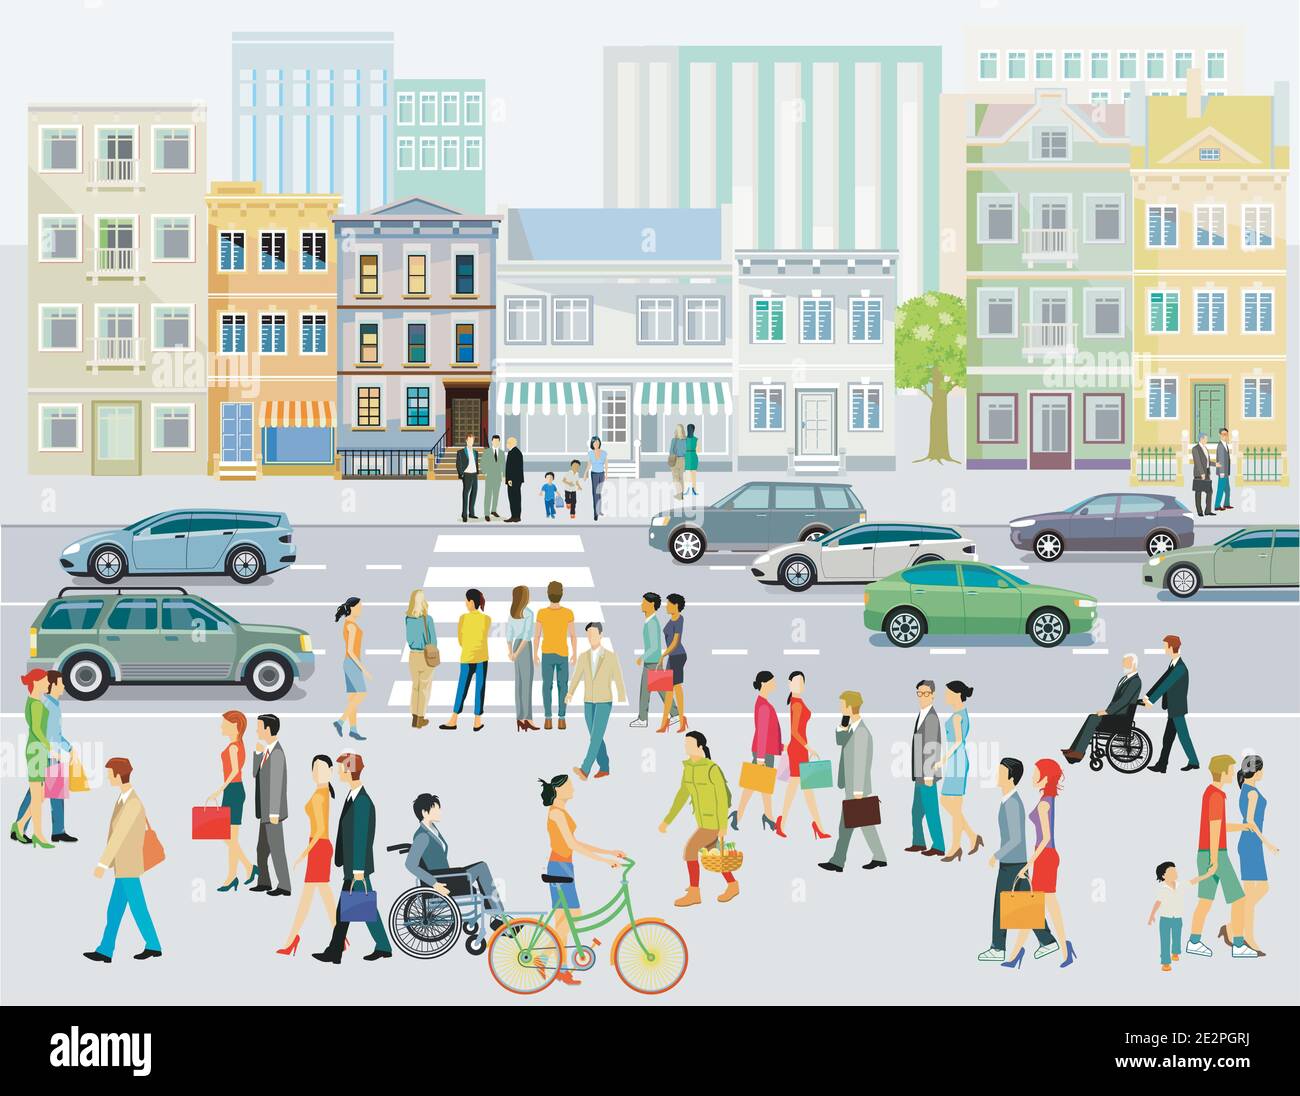 Street with pedestrians and crosswalks illustration Stock Vector